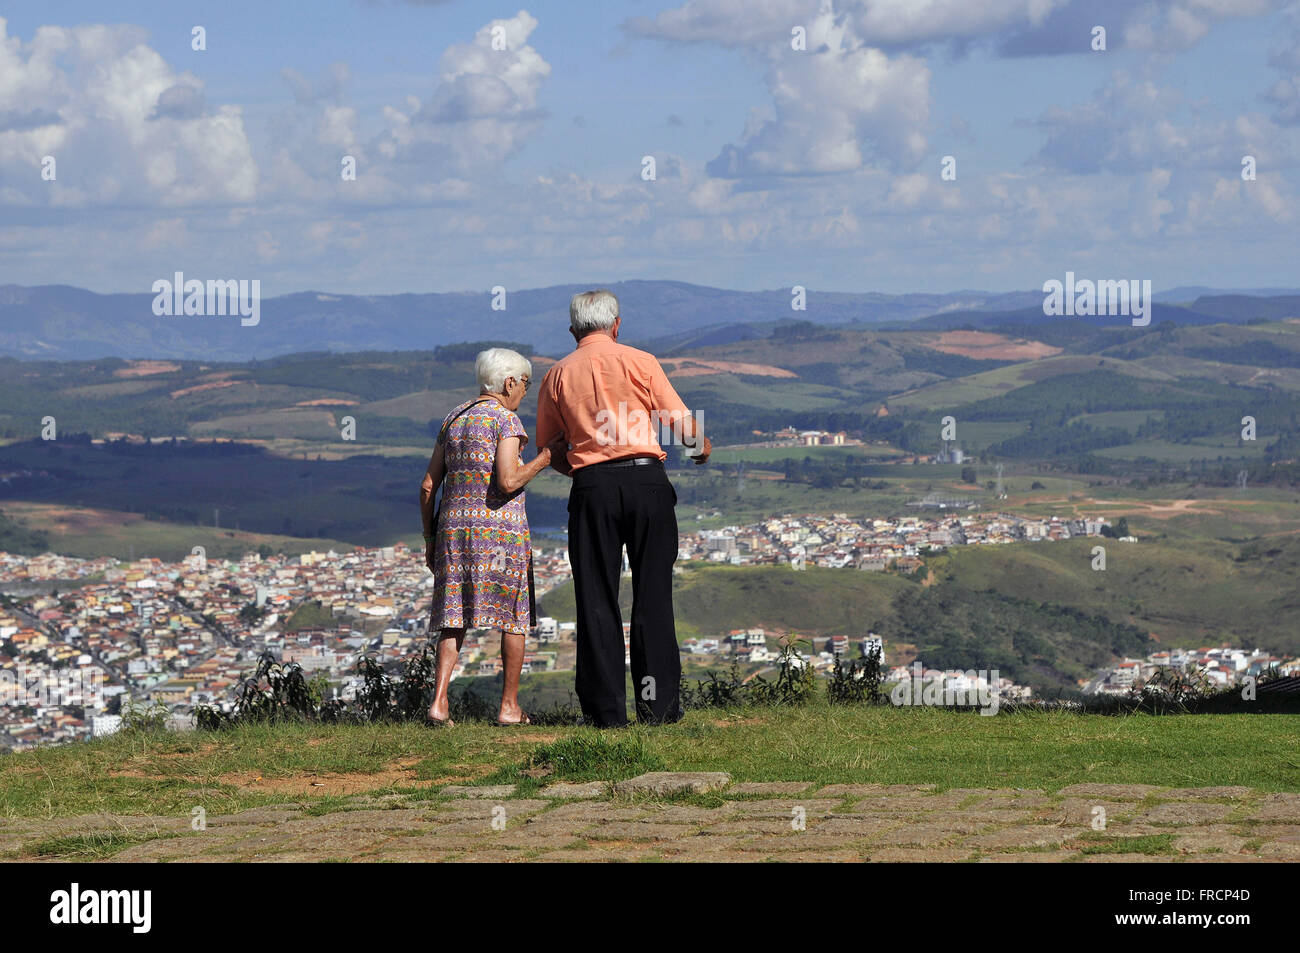 Elderly couple die in Christ overlooking the city Stock Photo